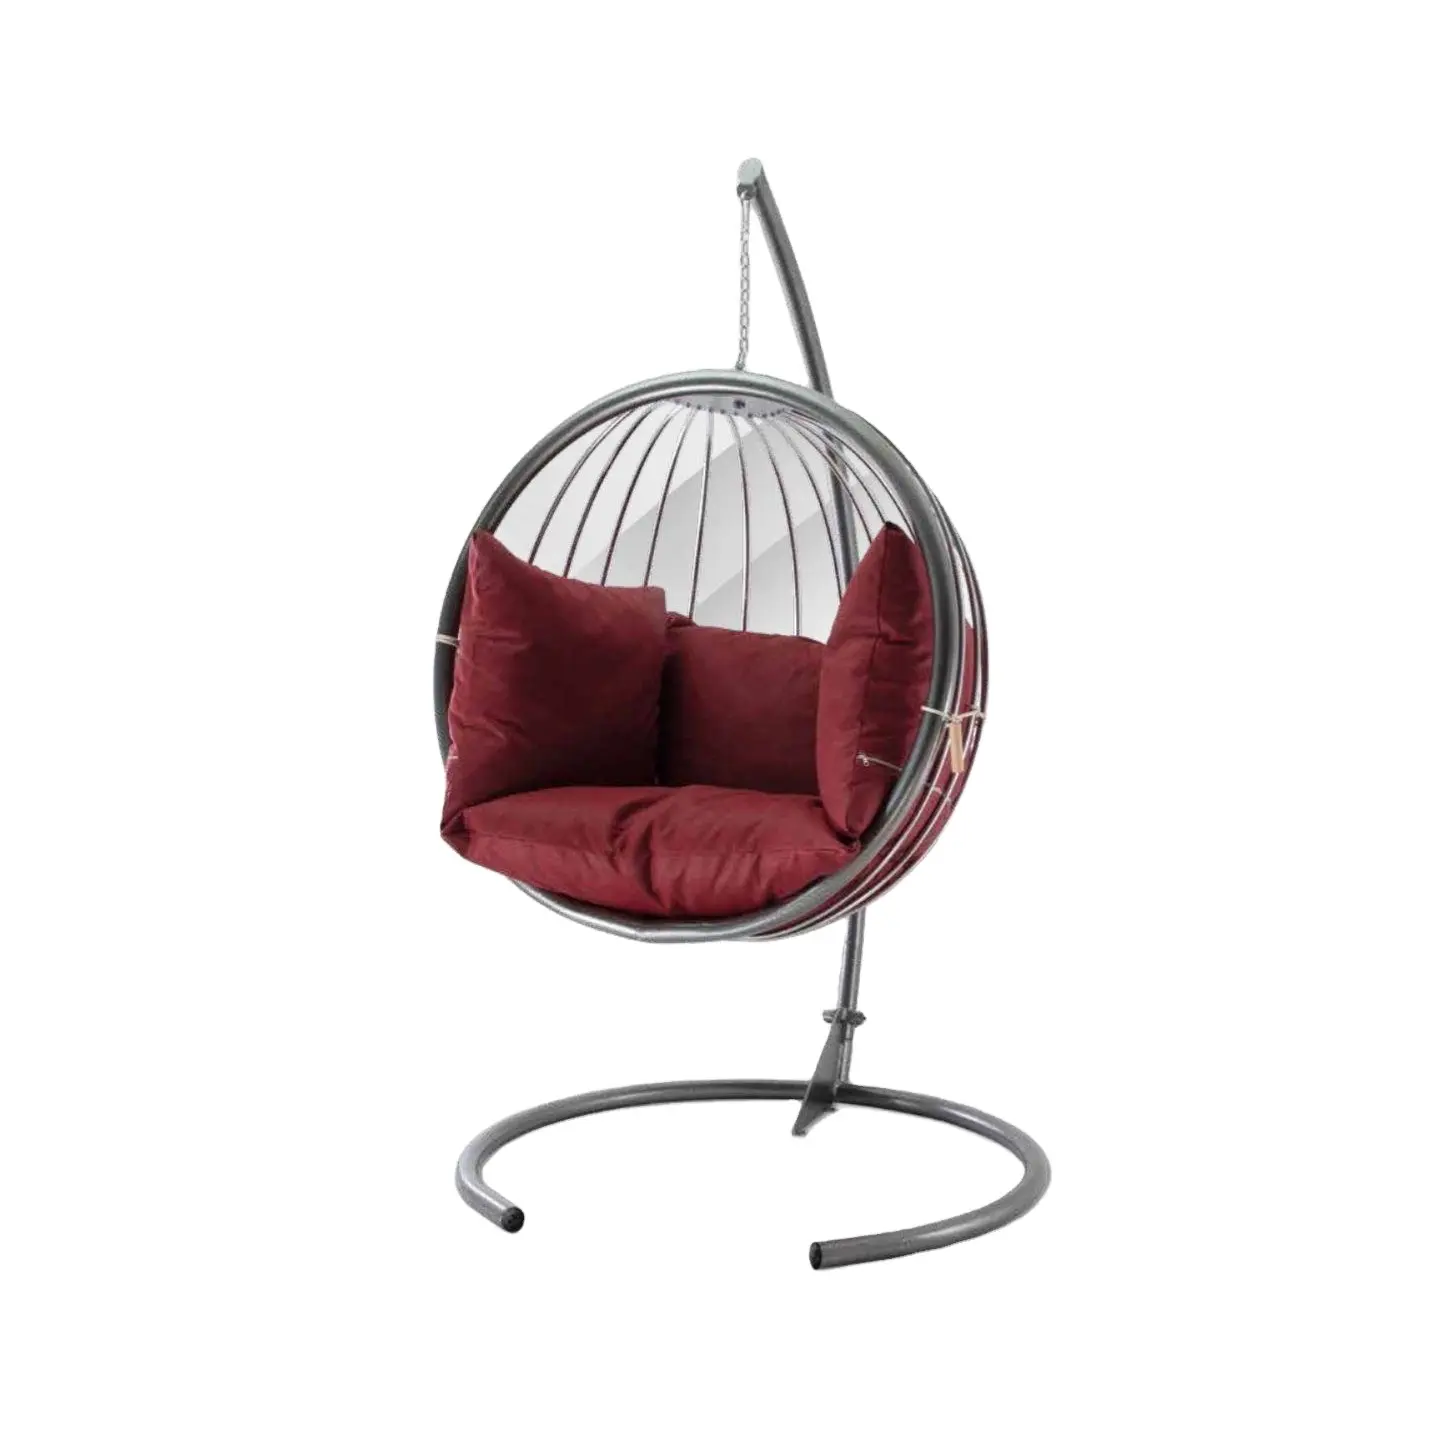 Factory Supply Buy 4 Get 1 Free Original Patio Rattan /Wicker Furniture Egg Shape Swing Chair